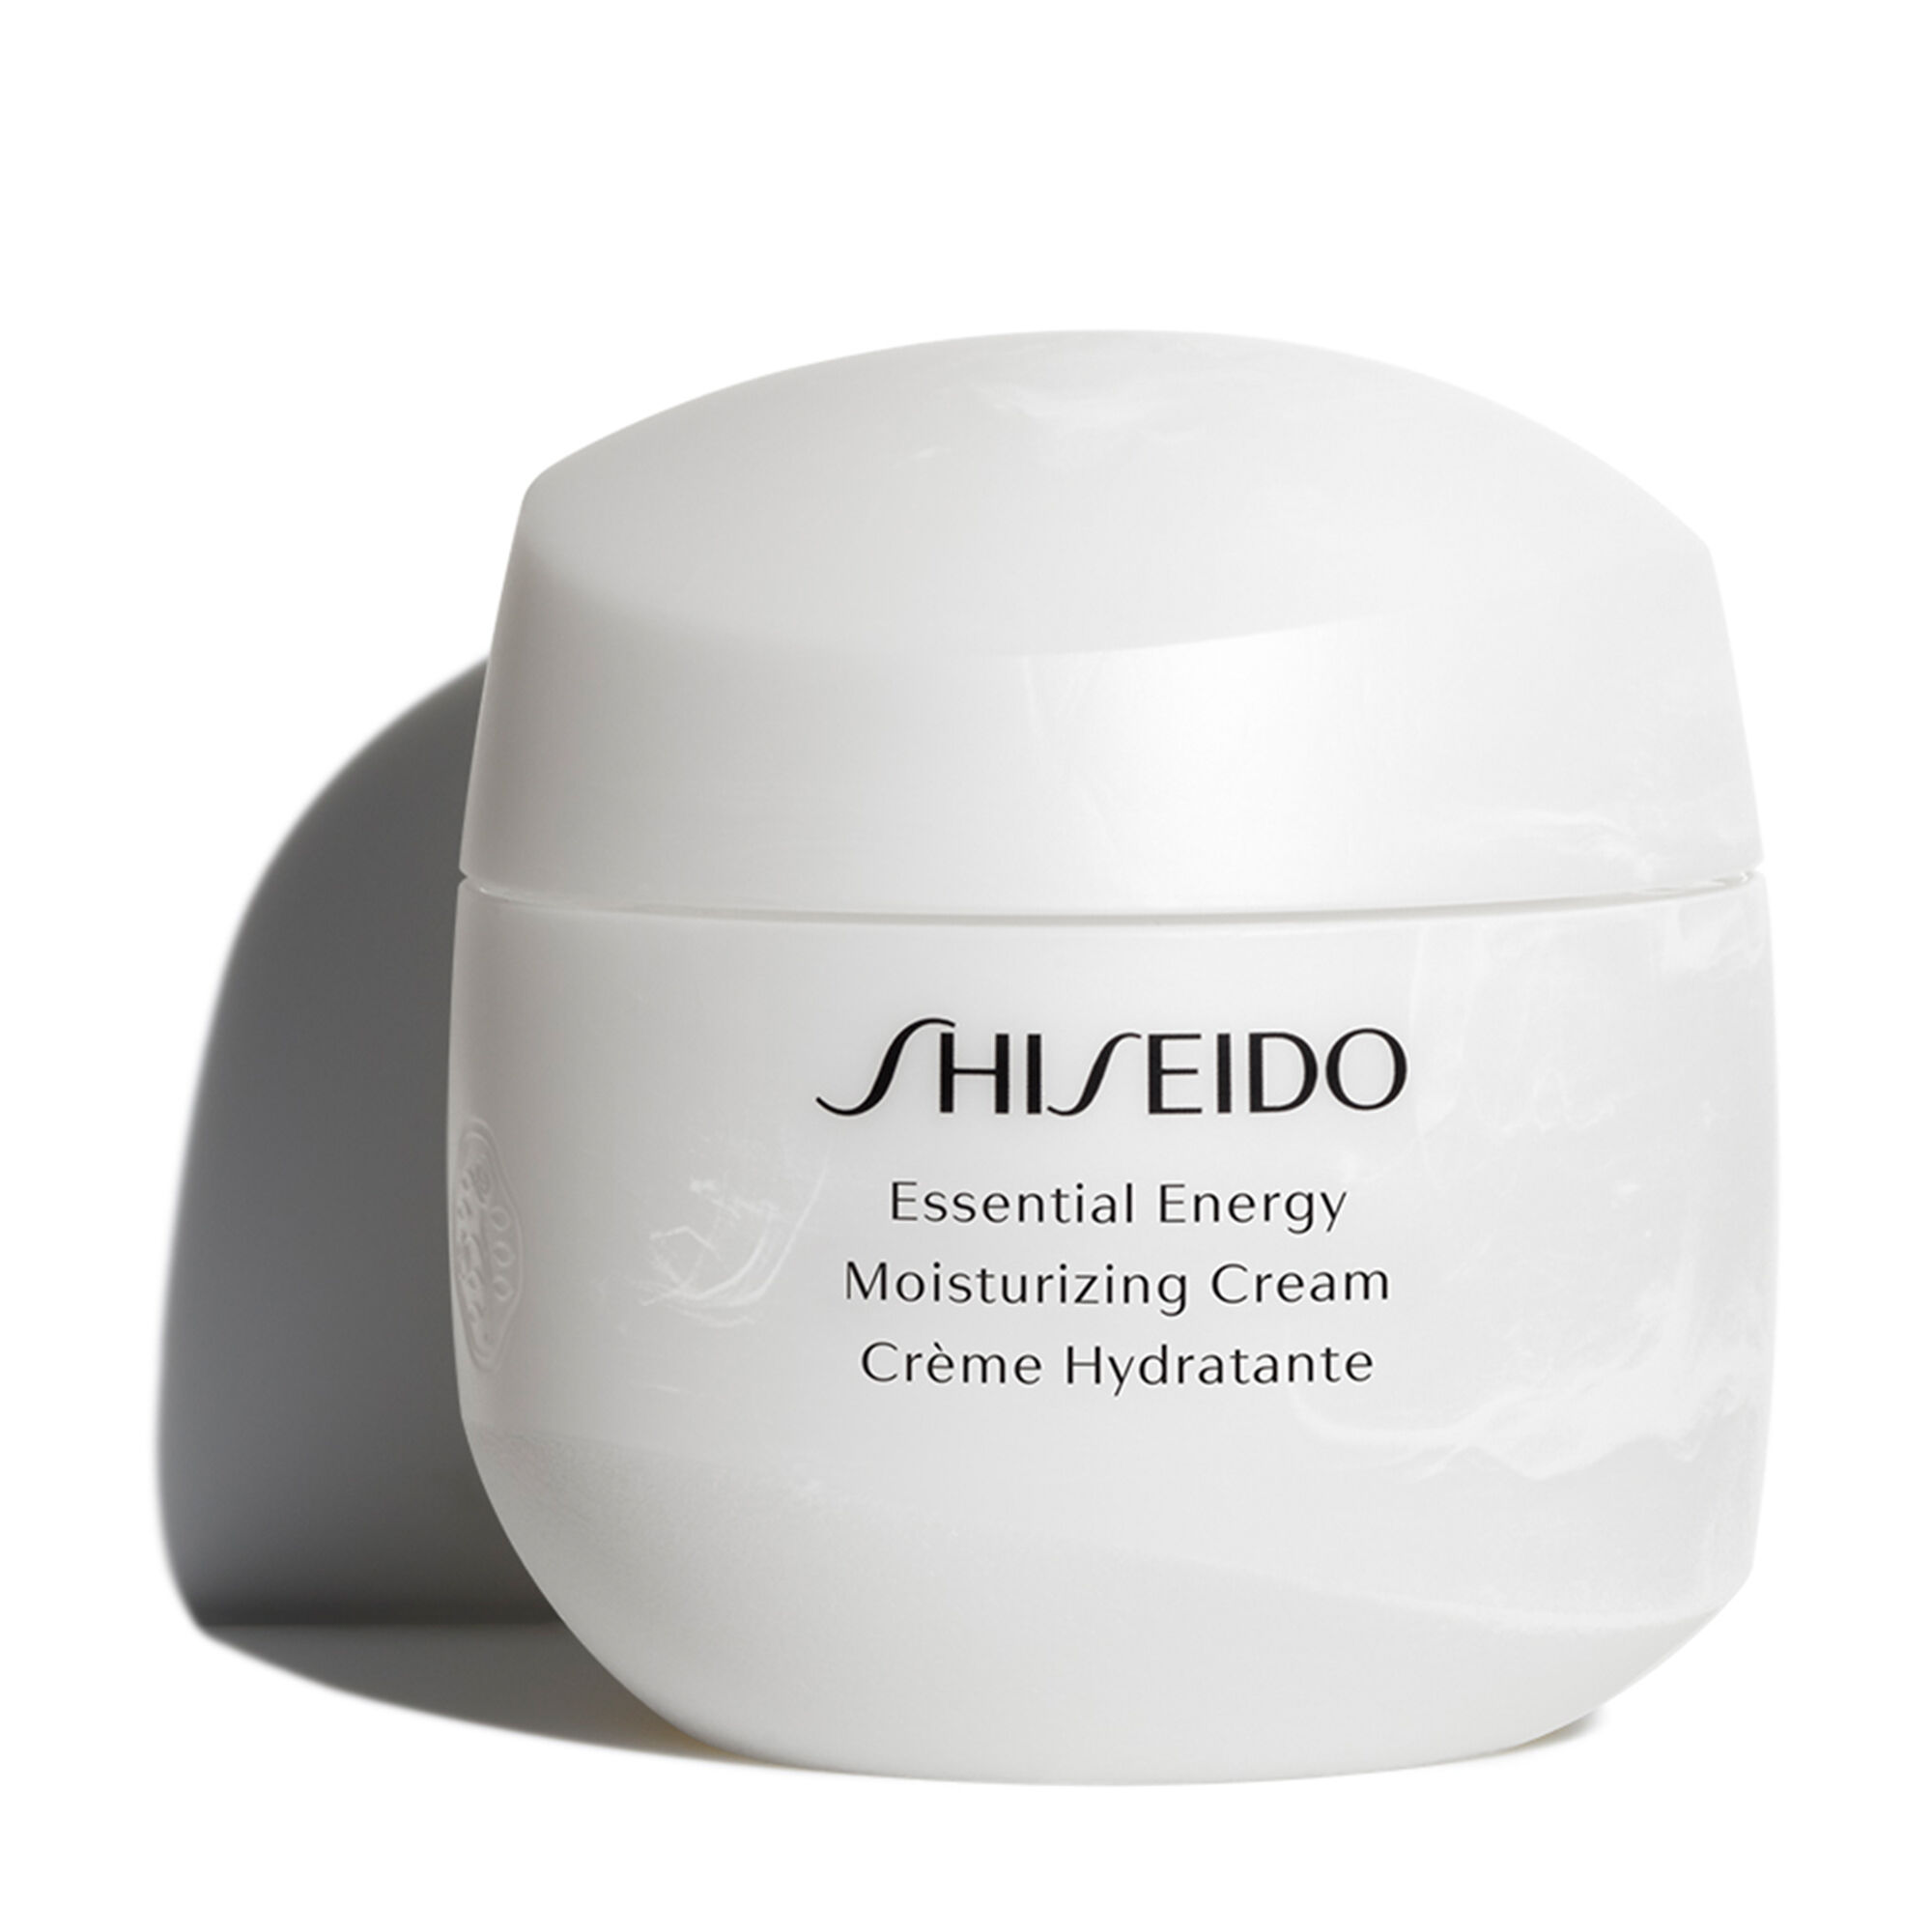 Essential Energy Moisturizing Cream by Shiseido for Women - 1.7 oz Cream